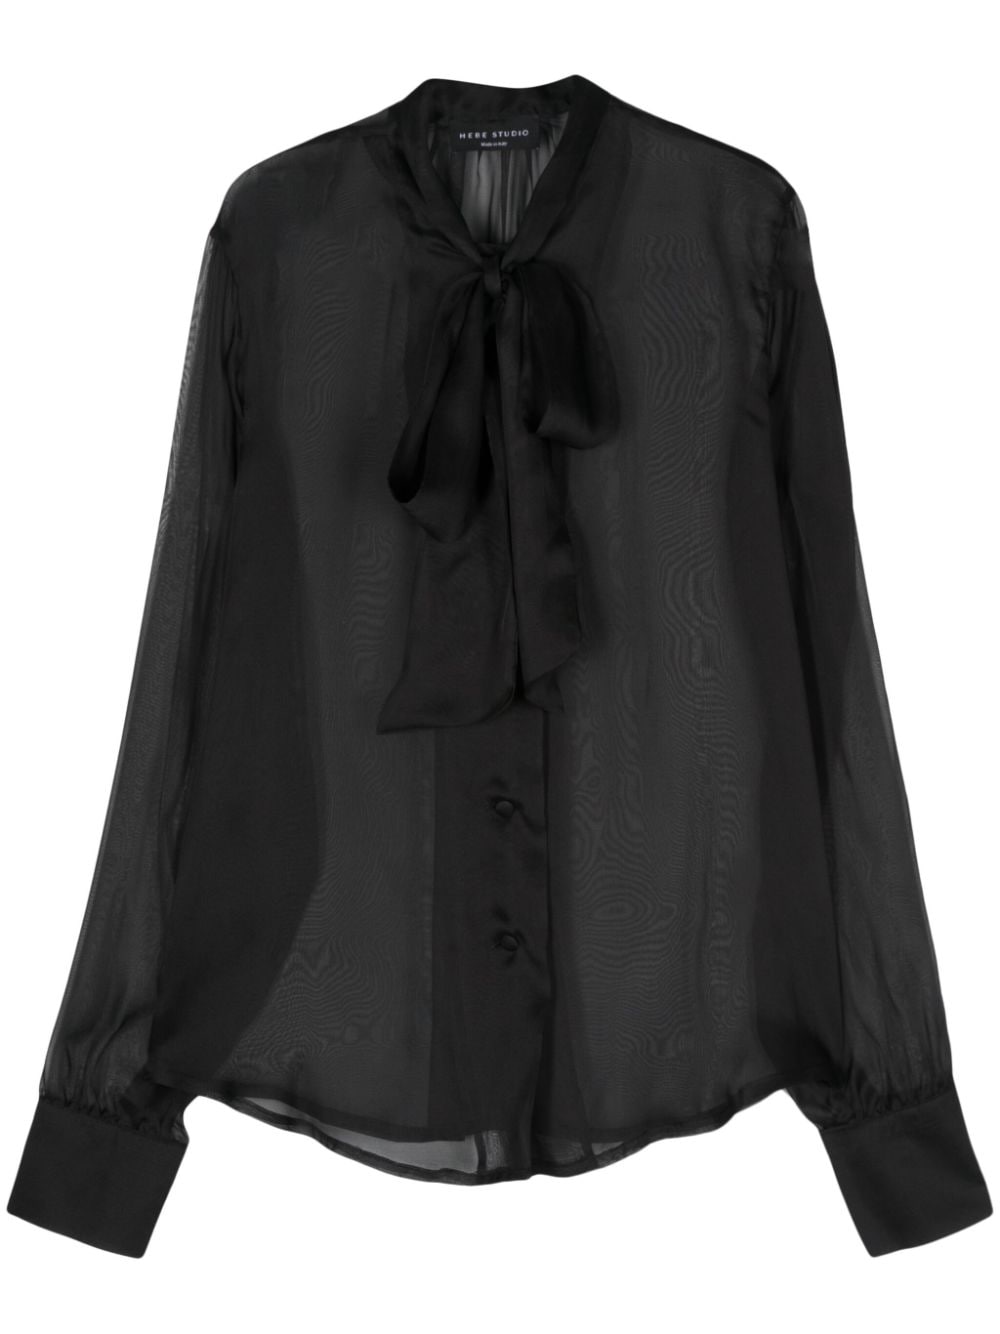 Hebe Studio semi-sheer silk blouse - Black von Hebe Studio